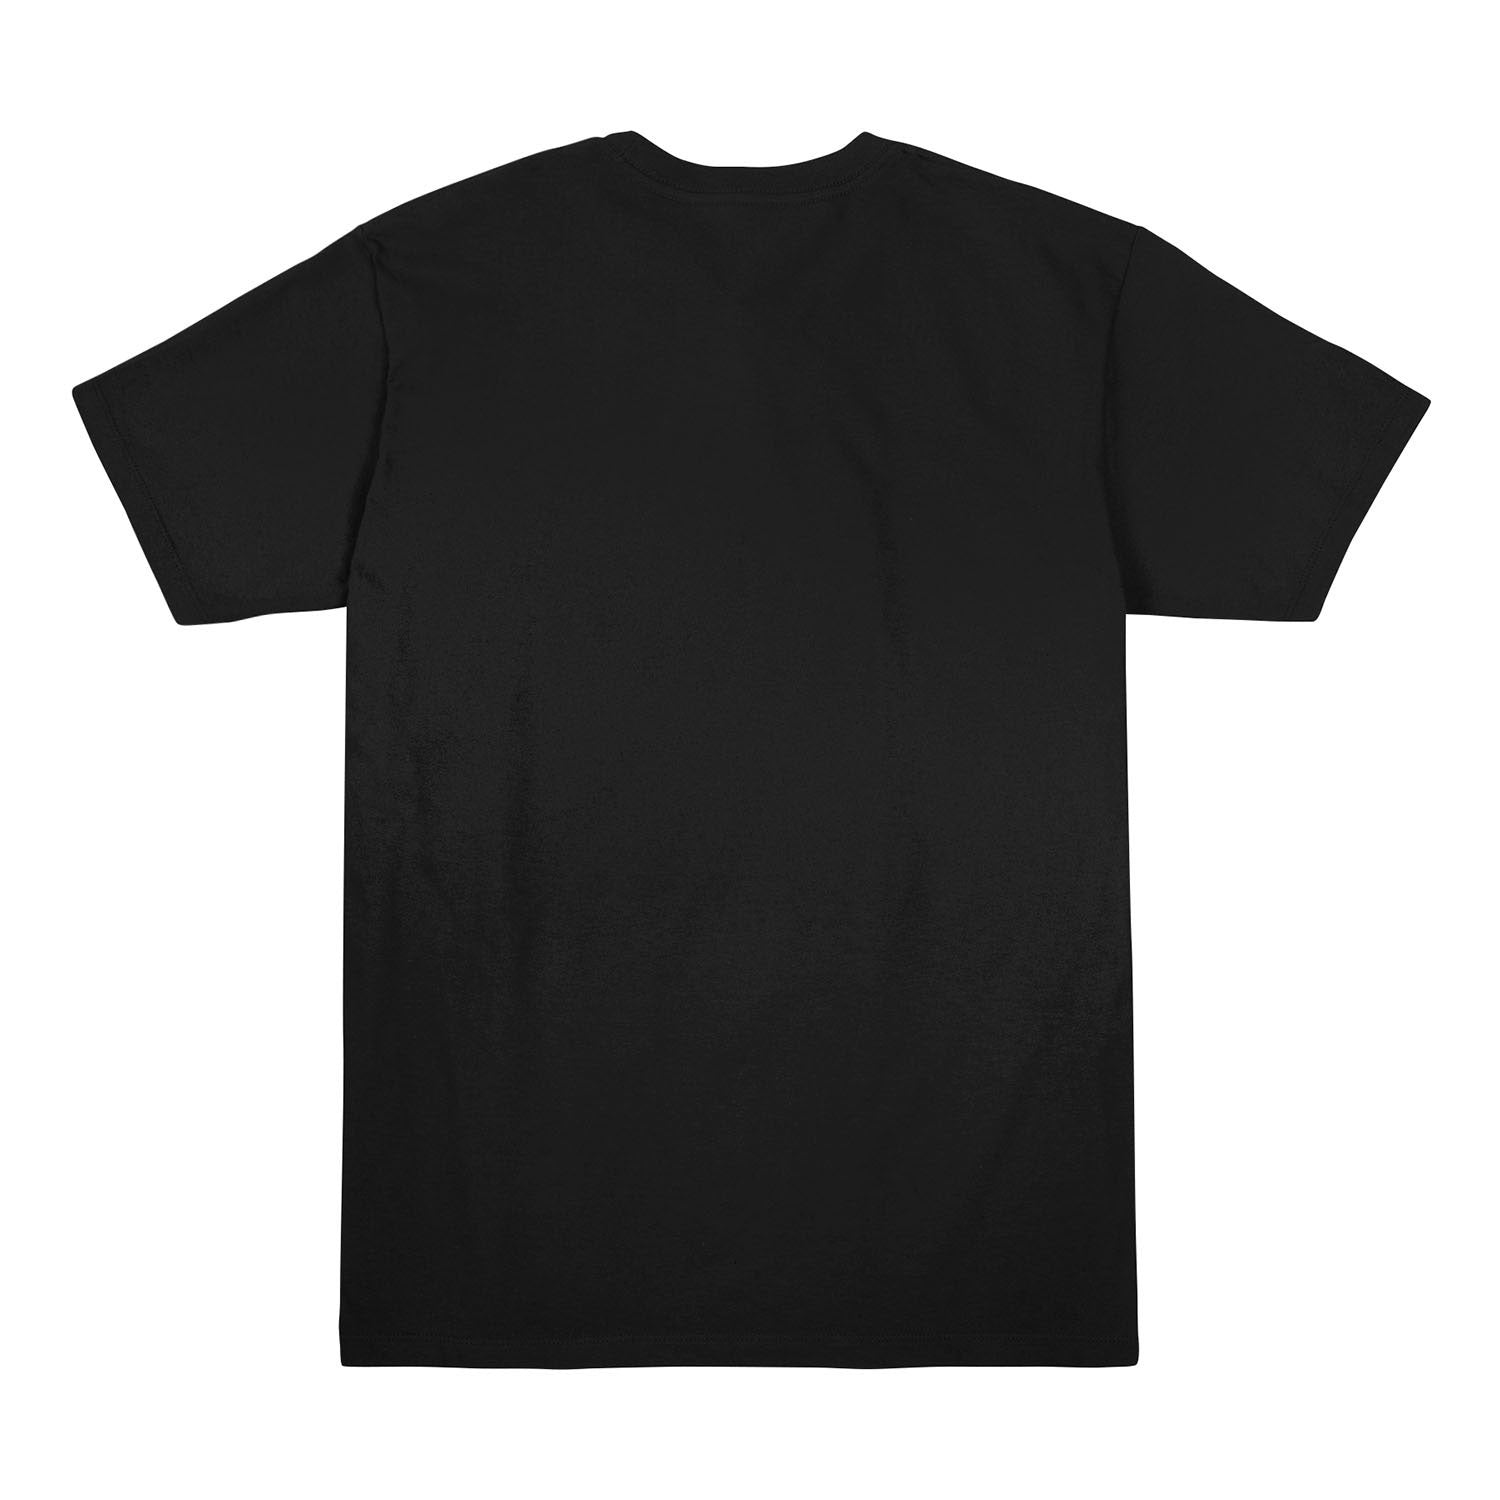 Call of Duty Gaz Silhouette Black T-Shirt - Back View